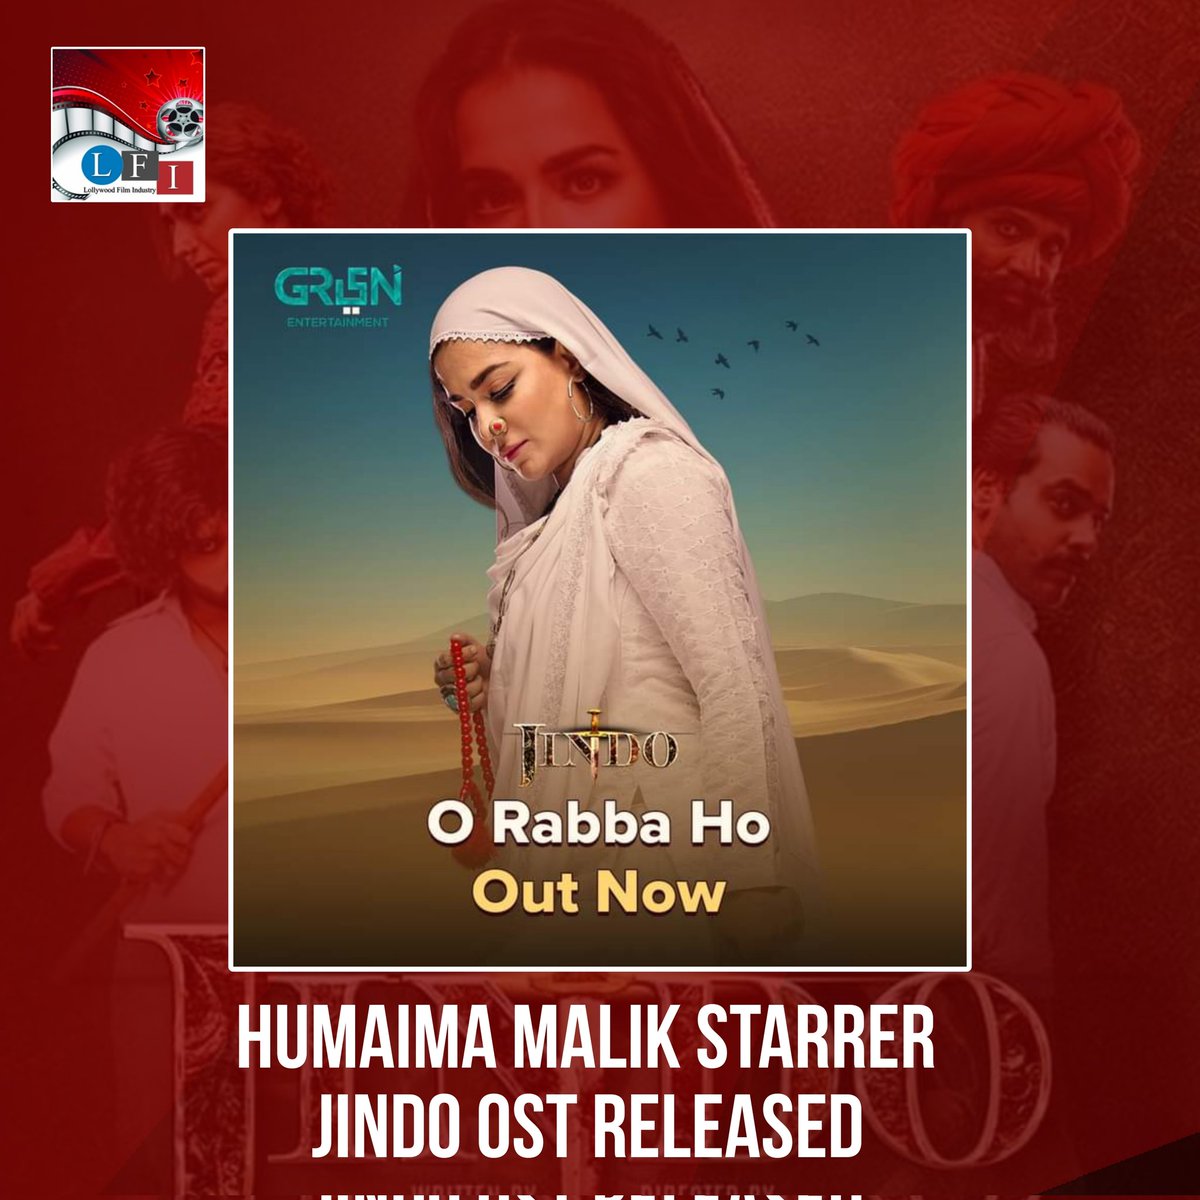 Humaima Malik Starrer Green Entertainment's Jindo OST Released!!!

#humaimamalick #jindo 
#ost #greenentertainment 
#goharrasheed #entertainment 
#LollywoodFilmIndustry